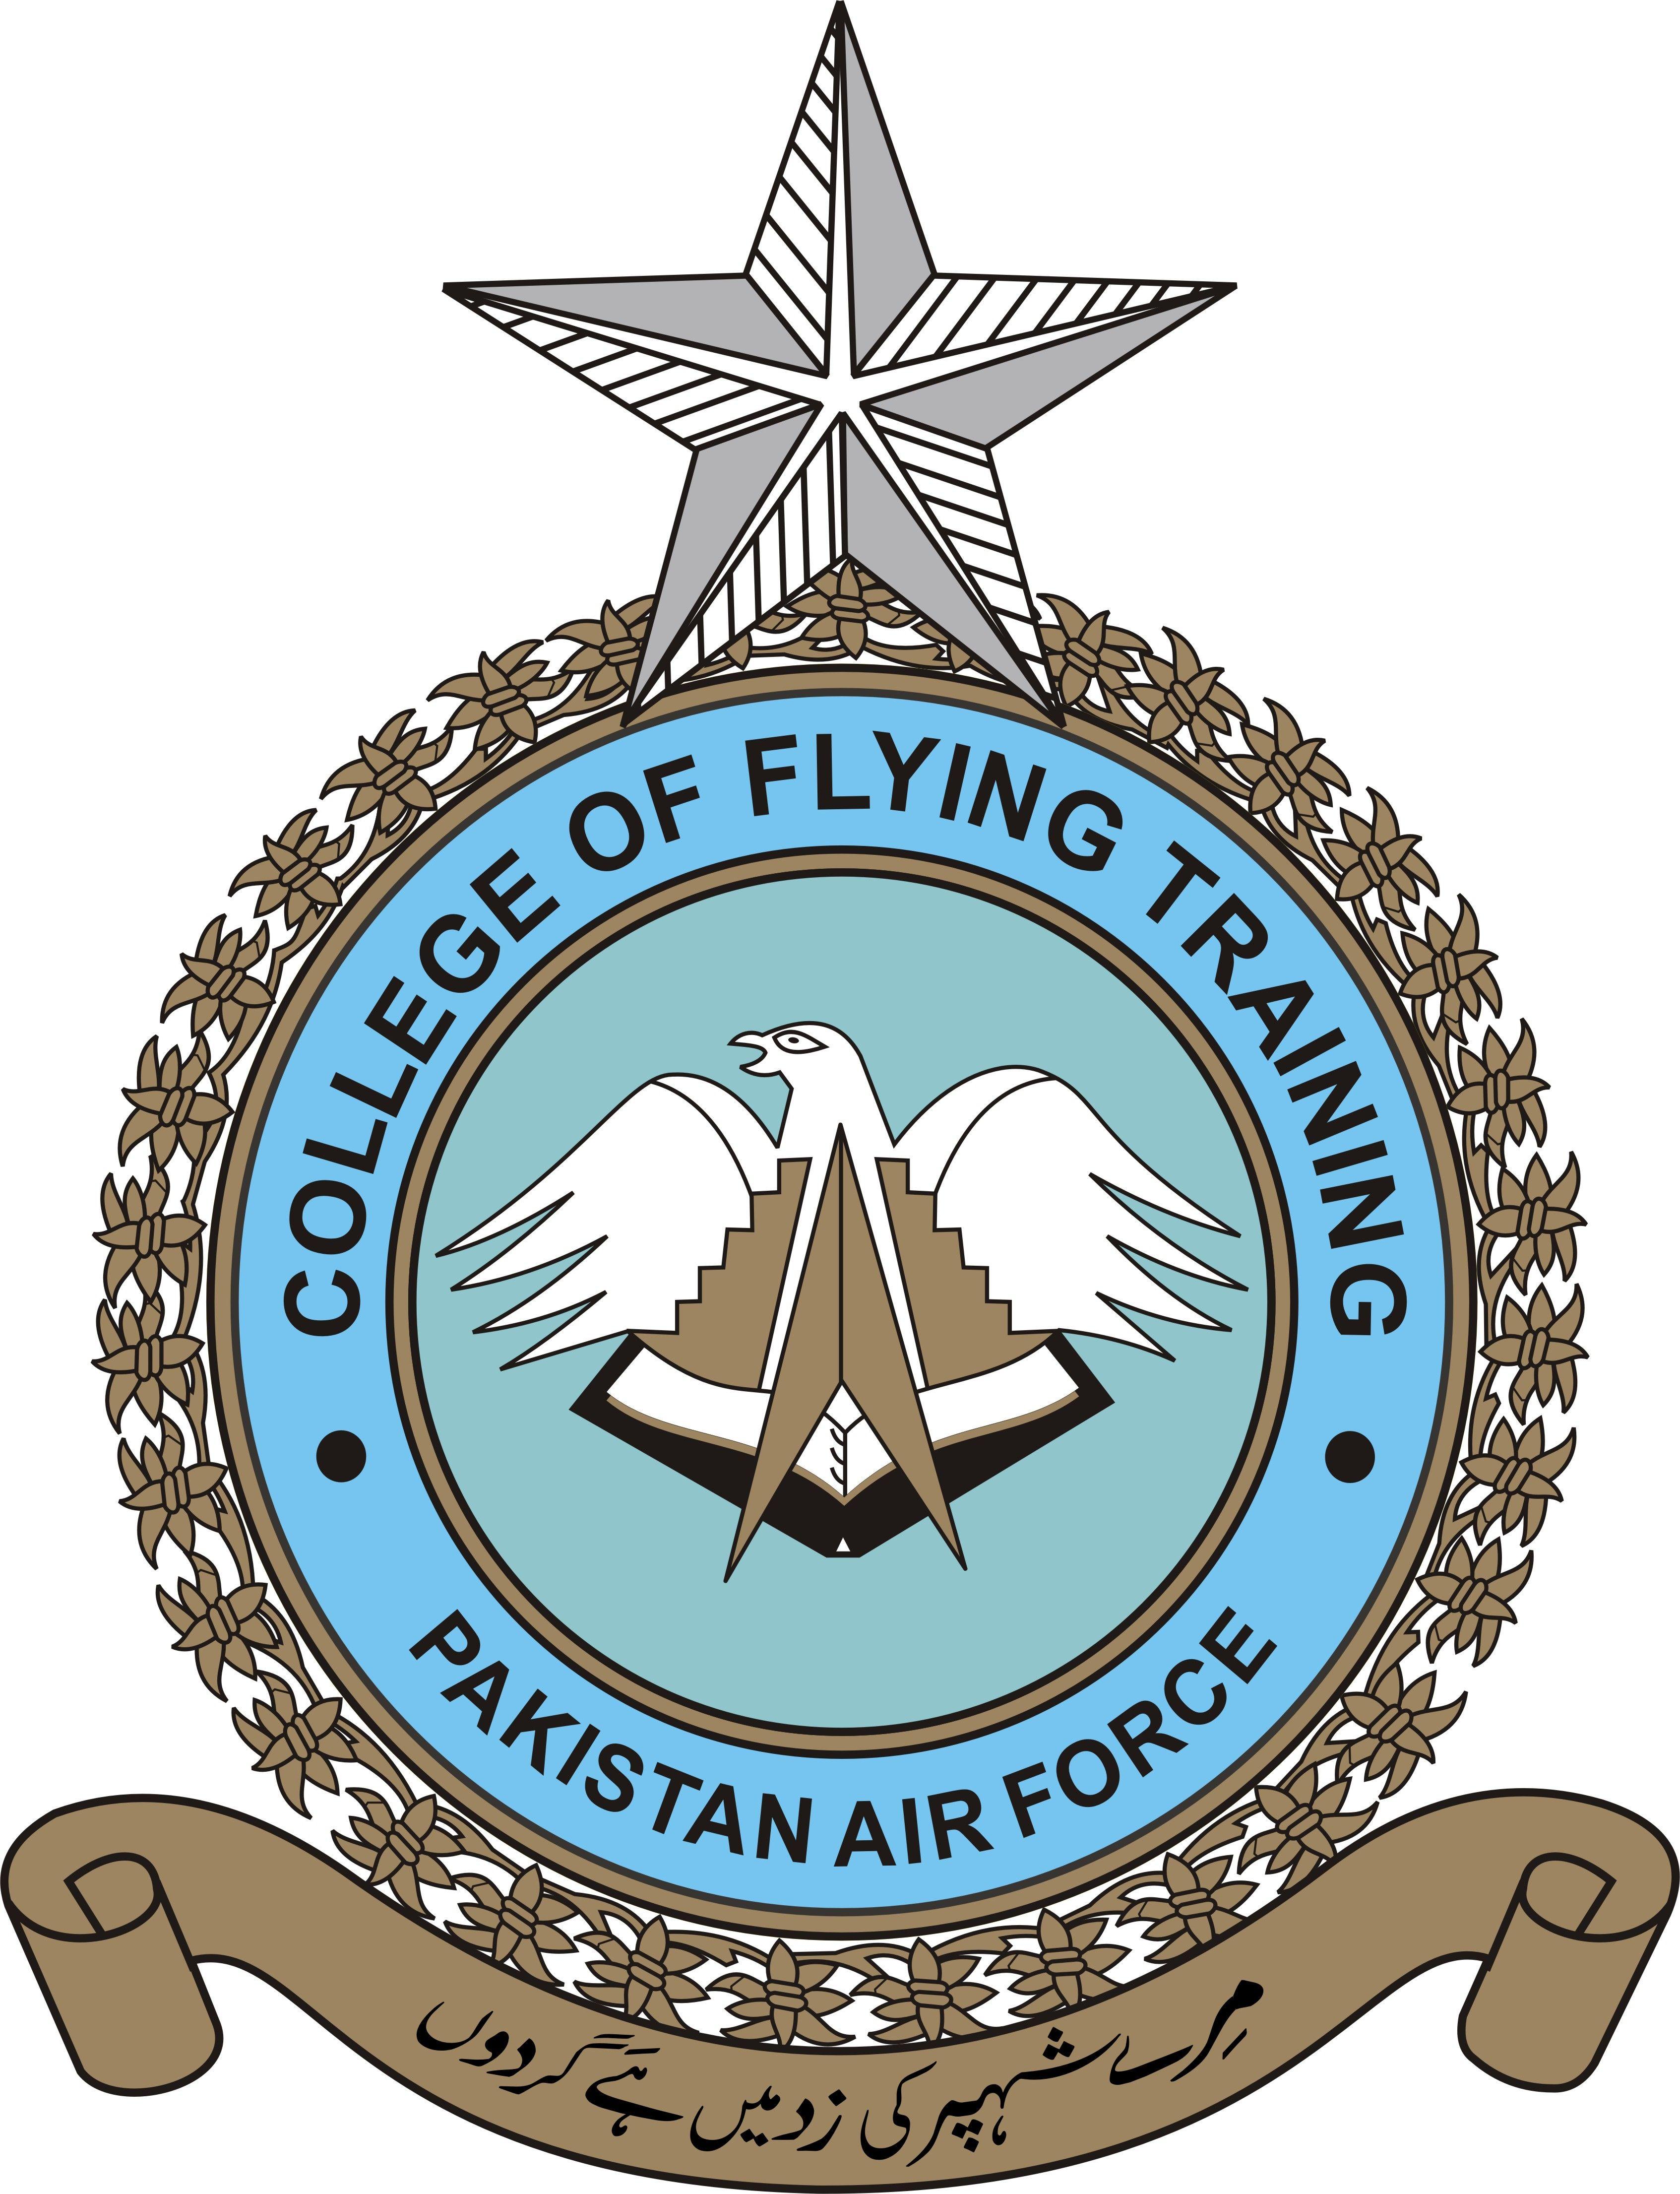 PAF Logo - File:College of Flying Training - Pakistan Air Force logo.jpg ...